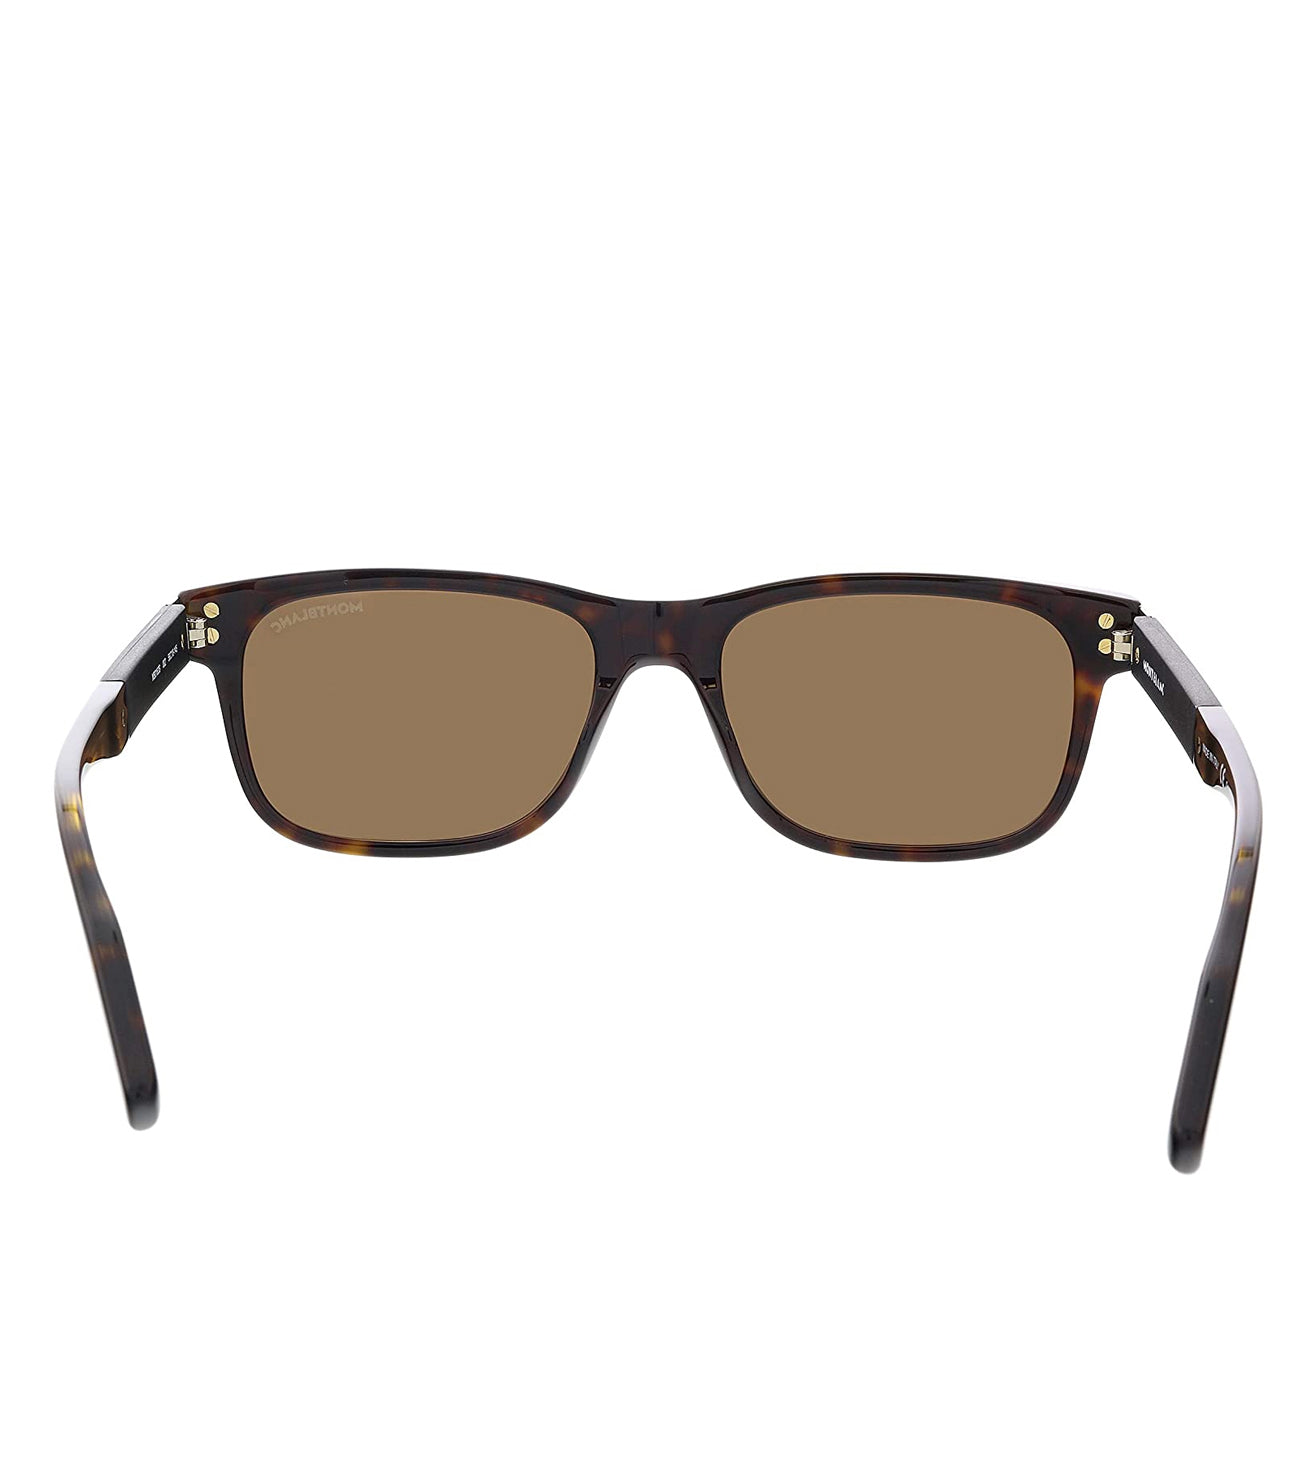 Montblanc Men's Brown Rectangular Sunglasses